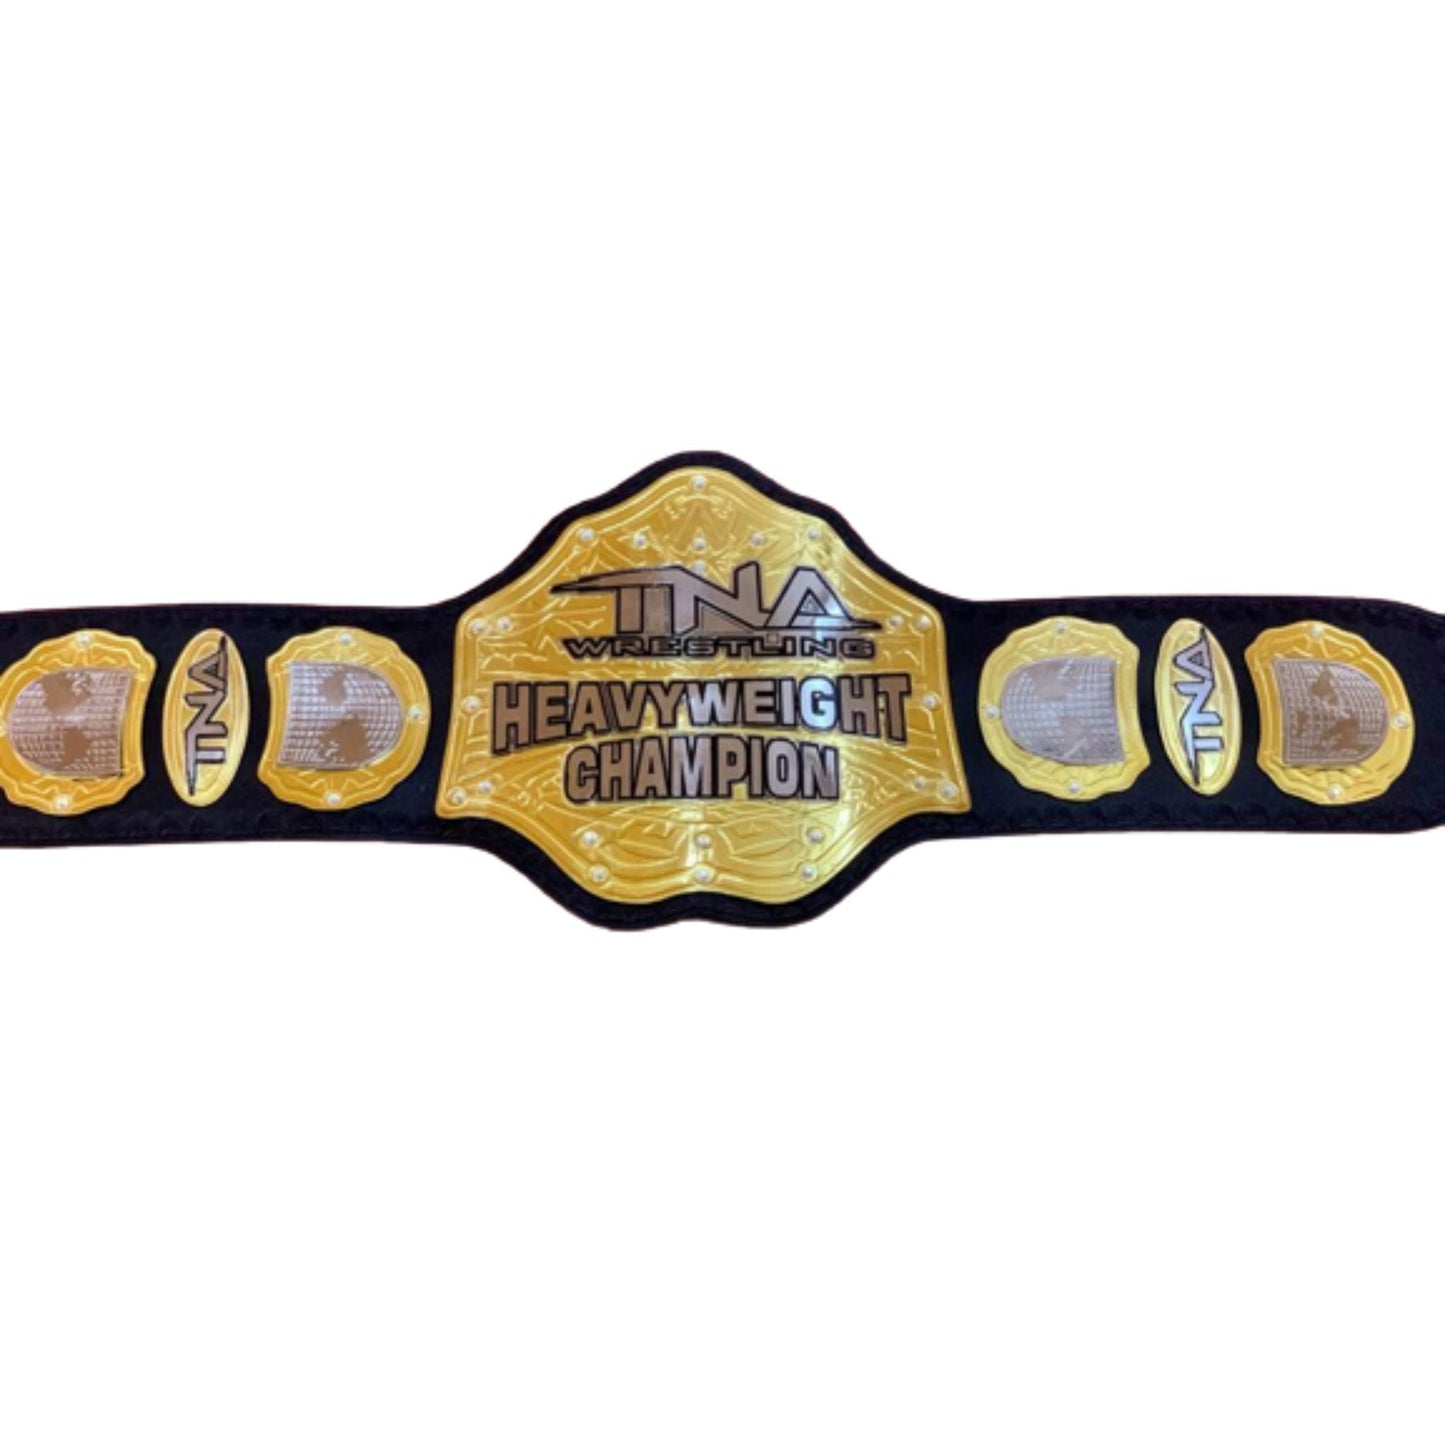 NEW TNA Wrestling Heavyweight Championship Replica Title Belt